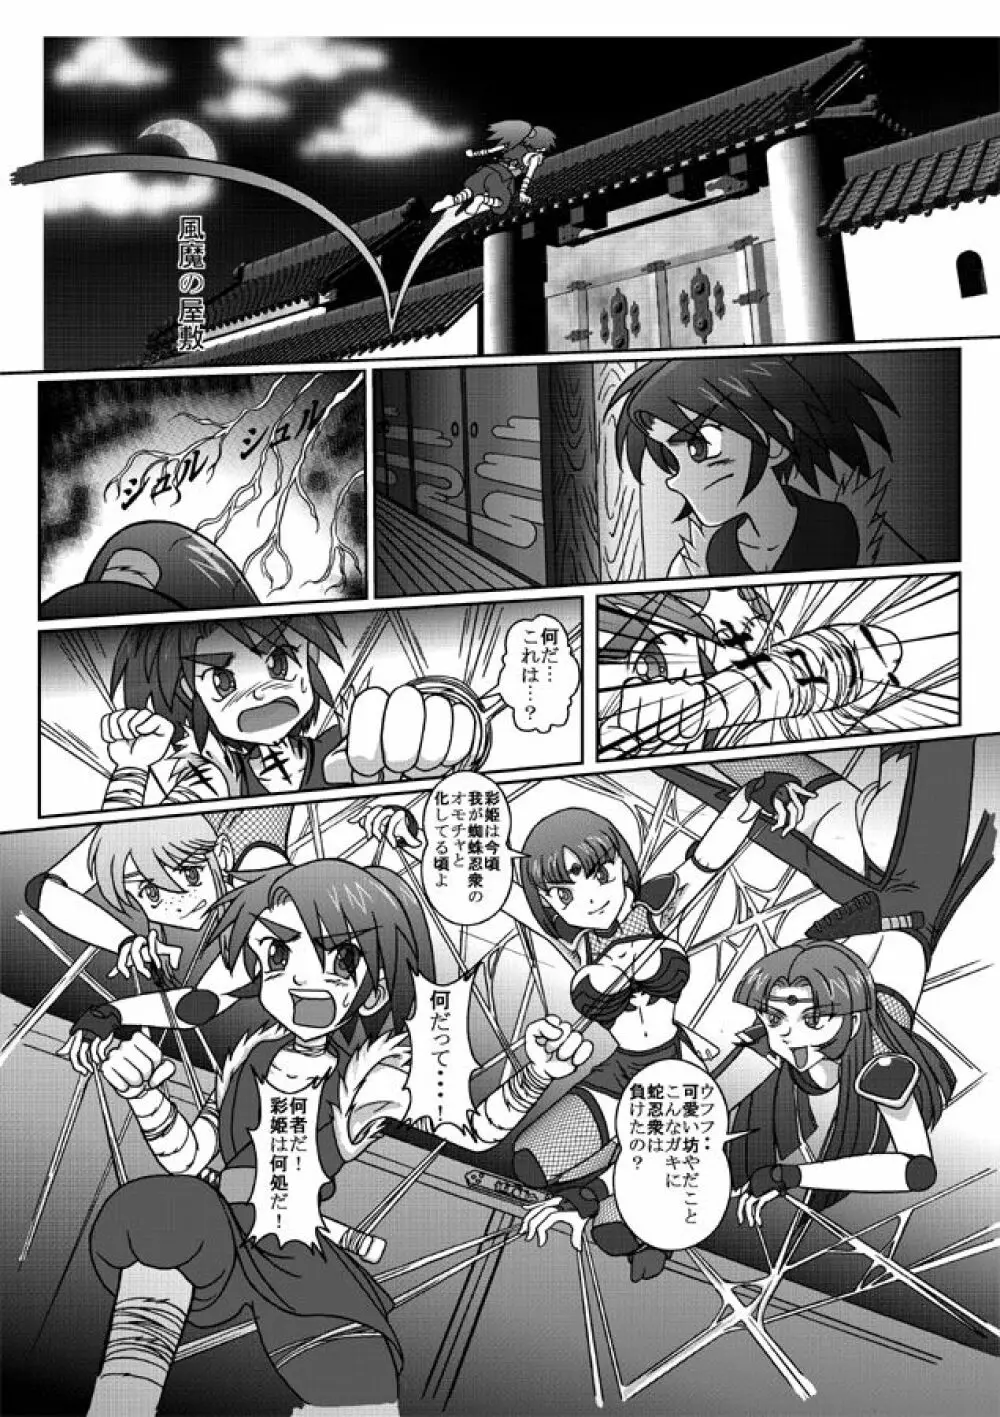 Same-themed manga about kid fighting female ninjas from japanese imageboard. 19ページ